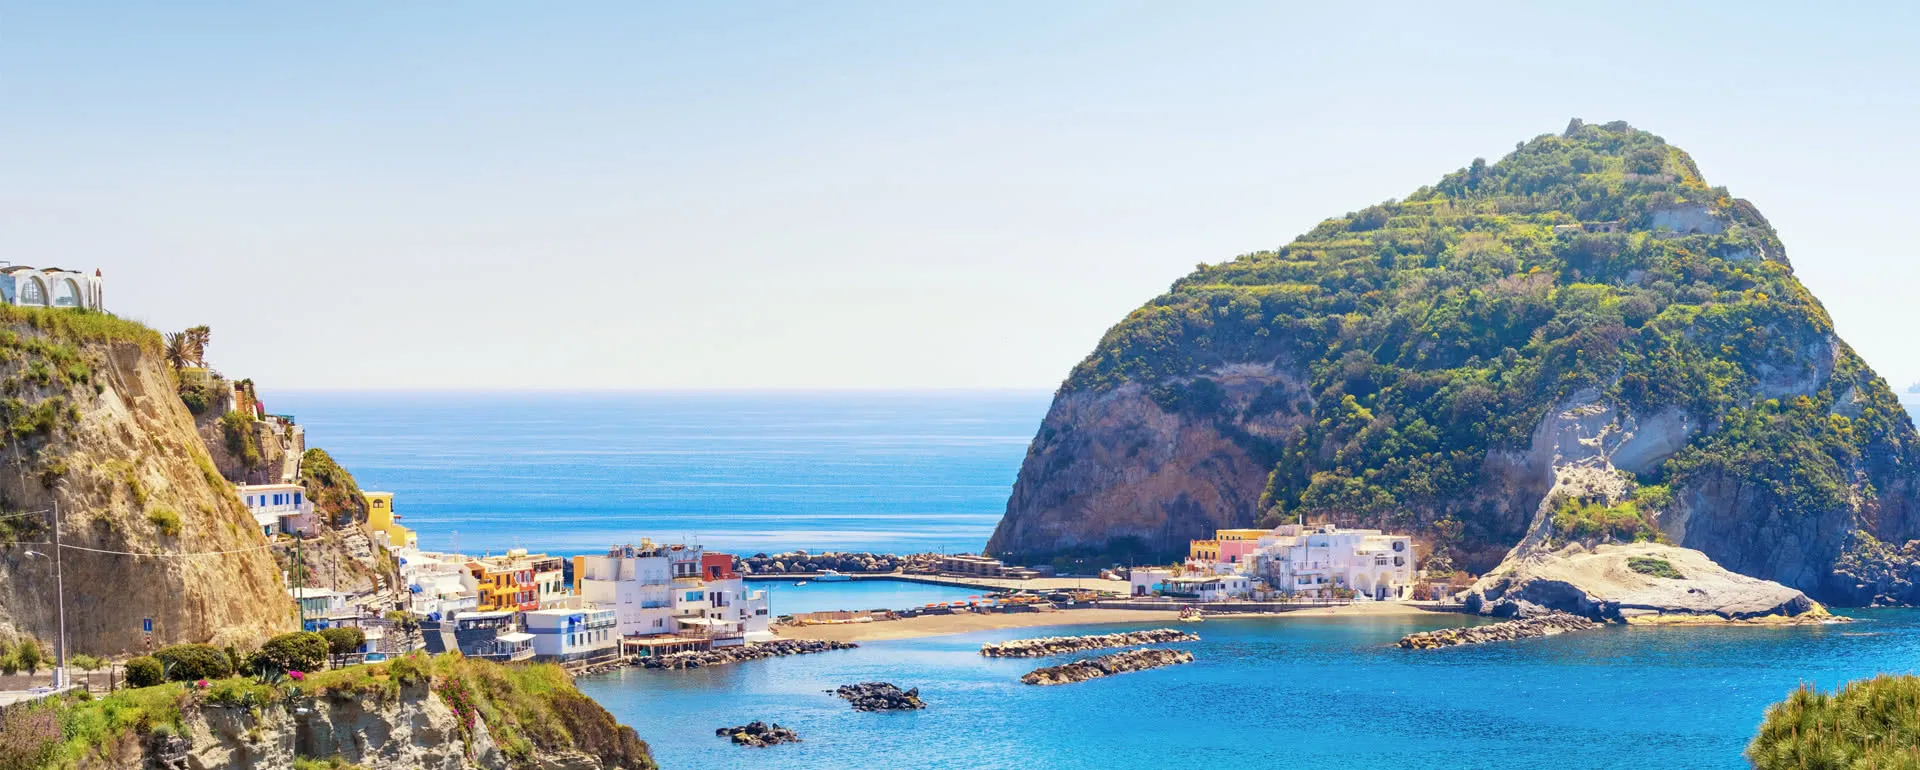 Ischia - the destination for school trips